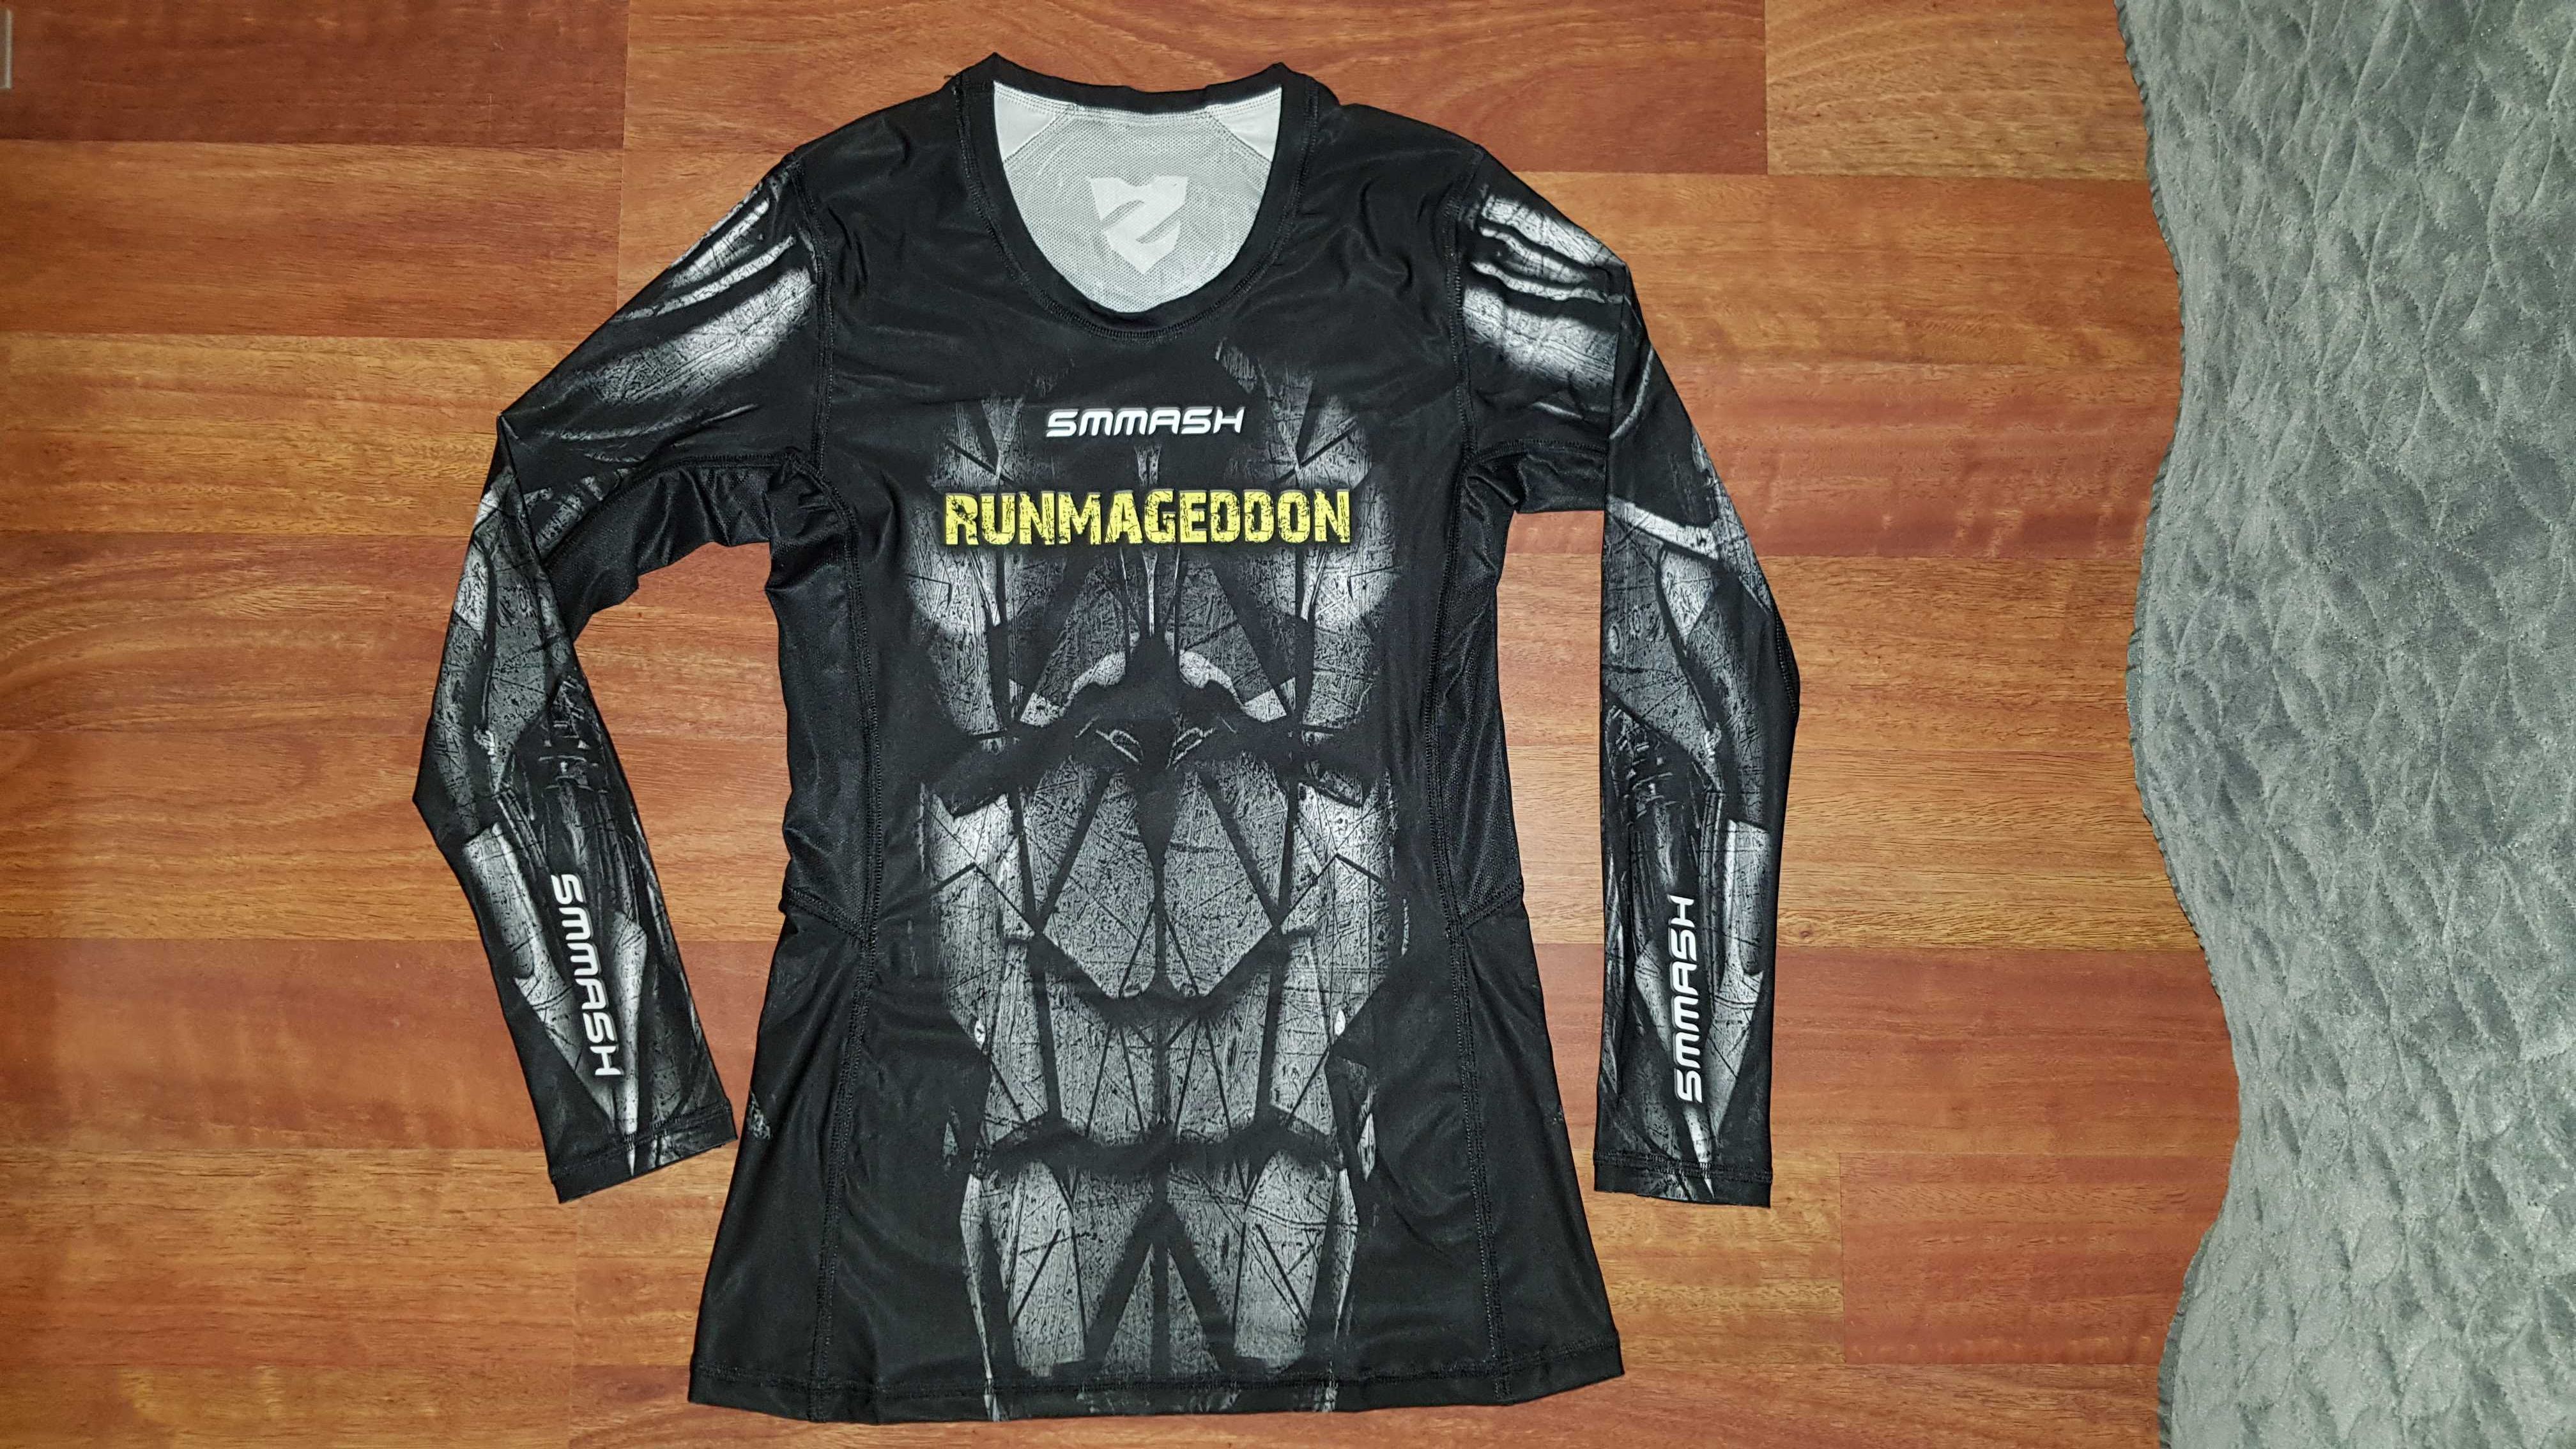 NOWA koszulka sportowa kompresyjna damska Runmageddon SMMASH rozm. L